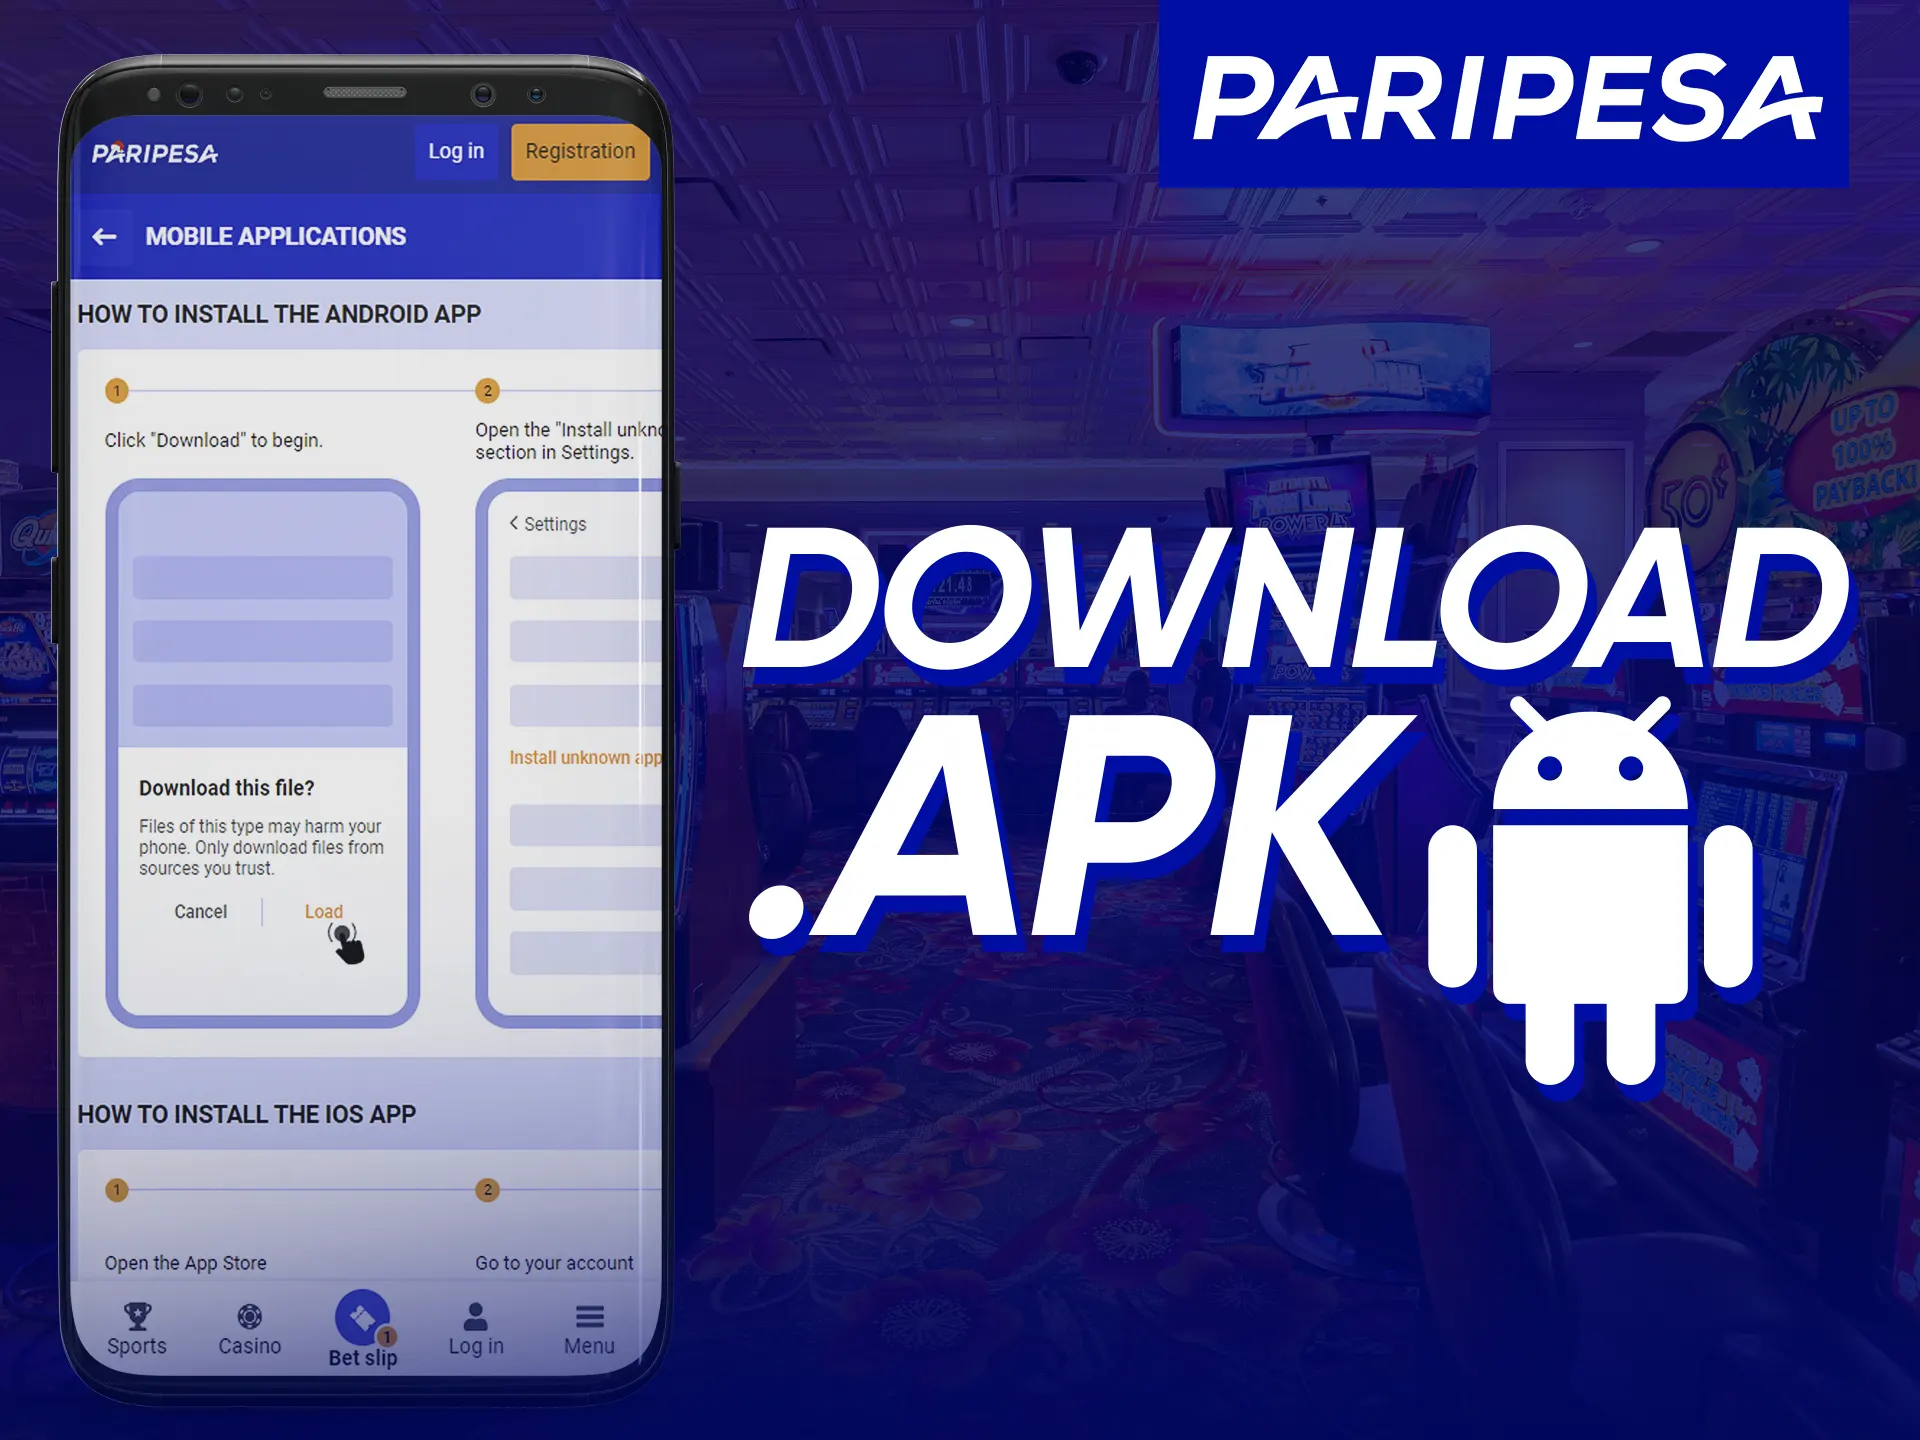 Download Paripesa APK, install, open, login or create account.